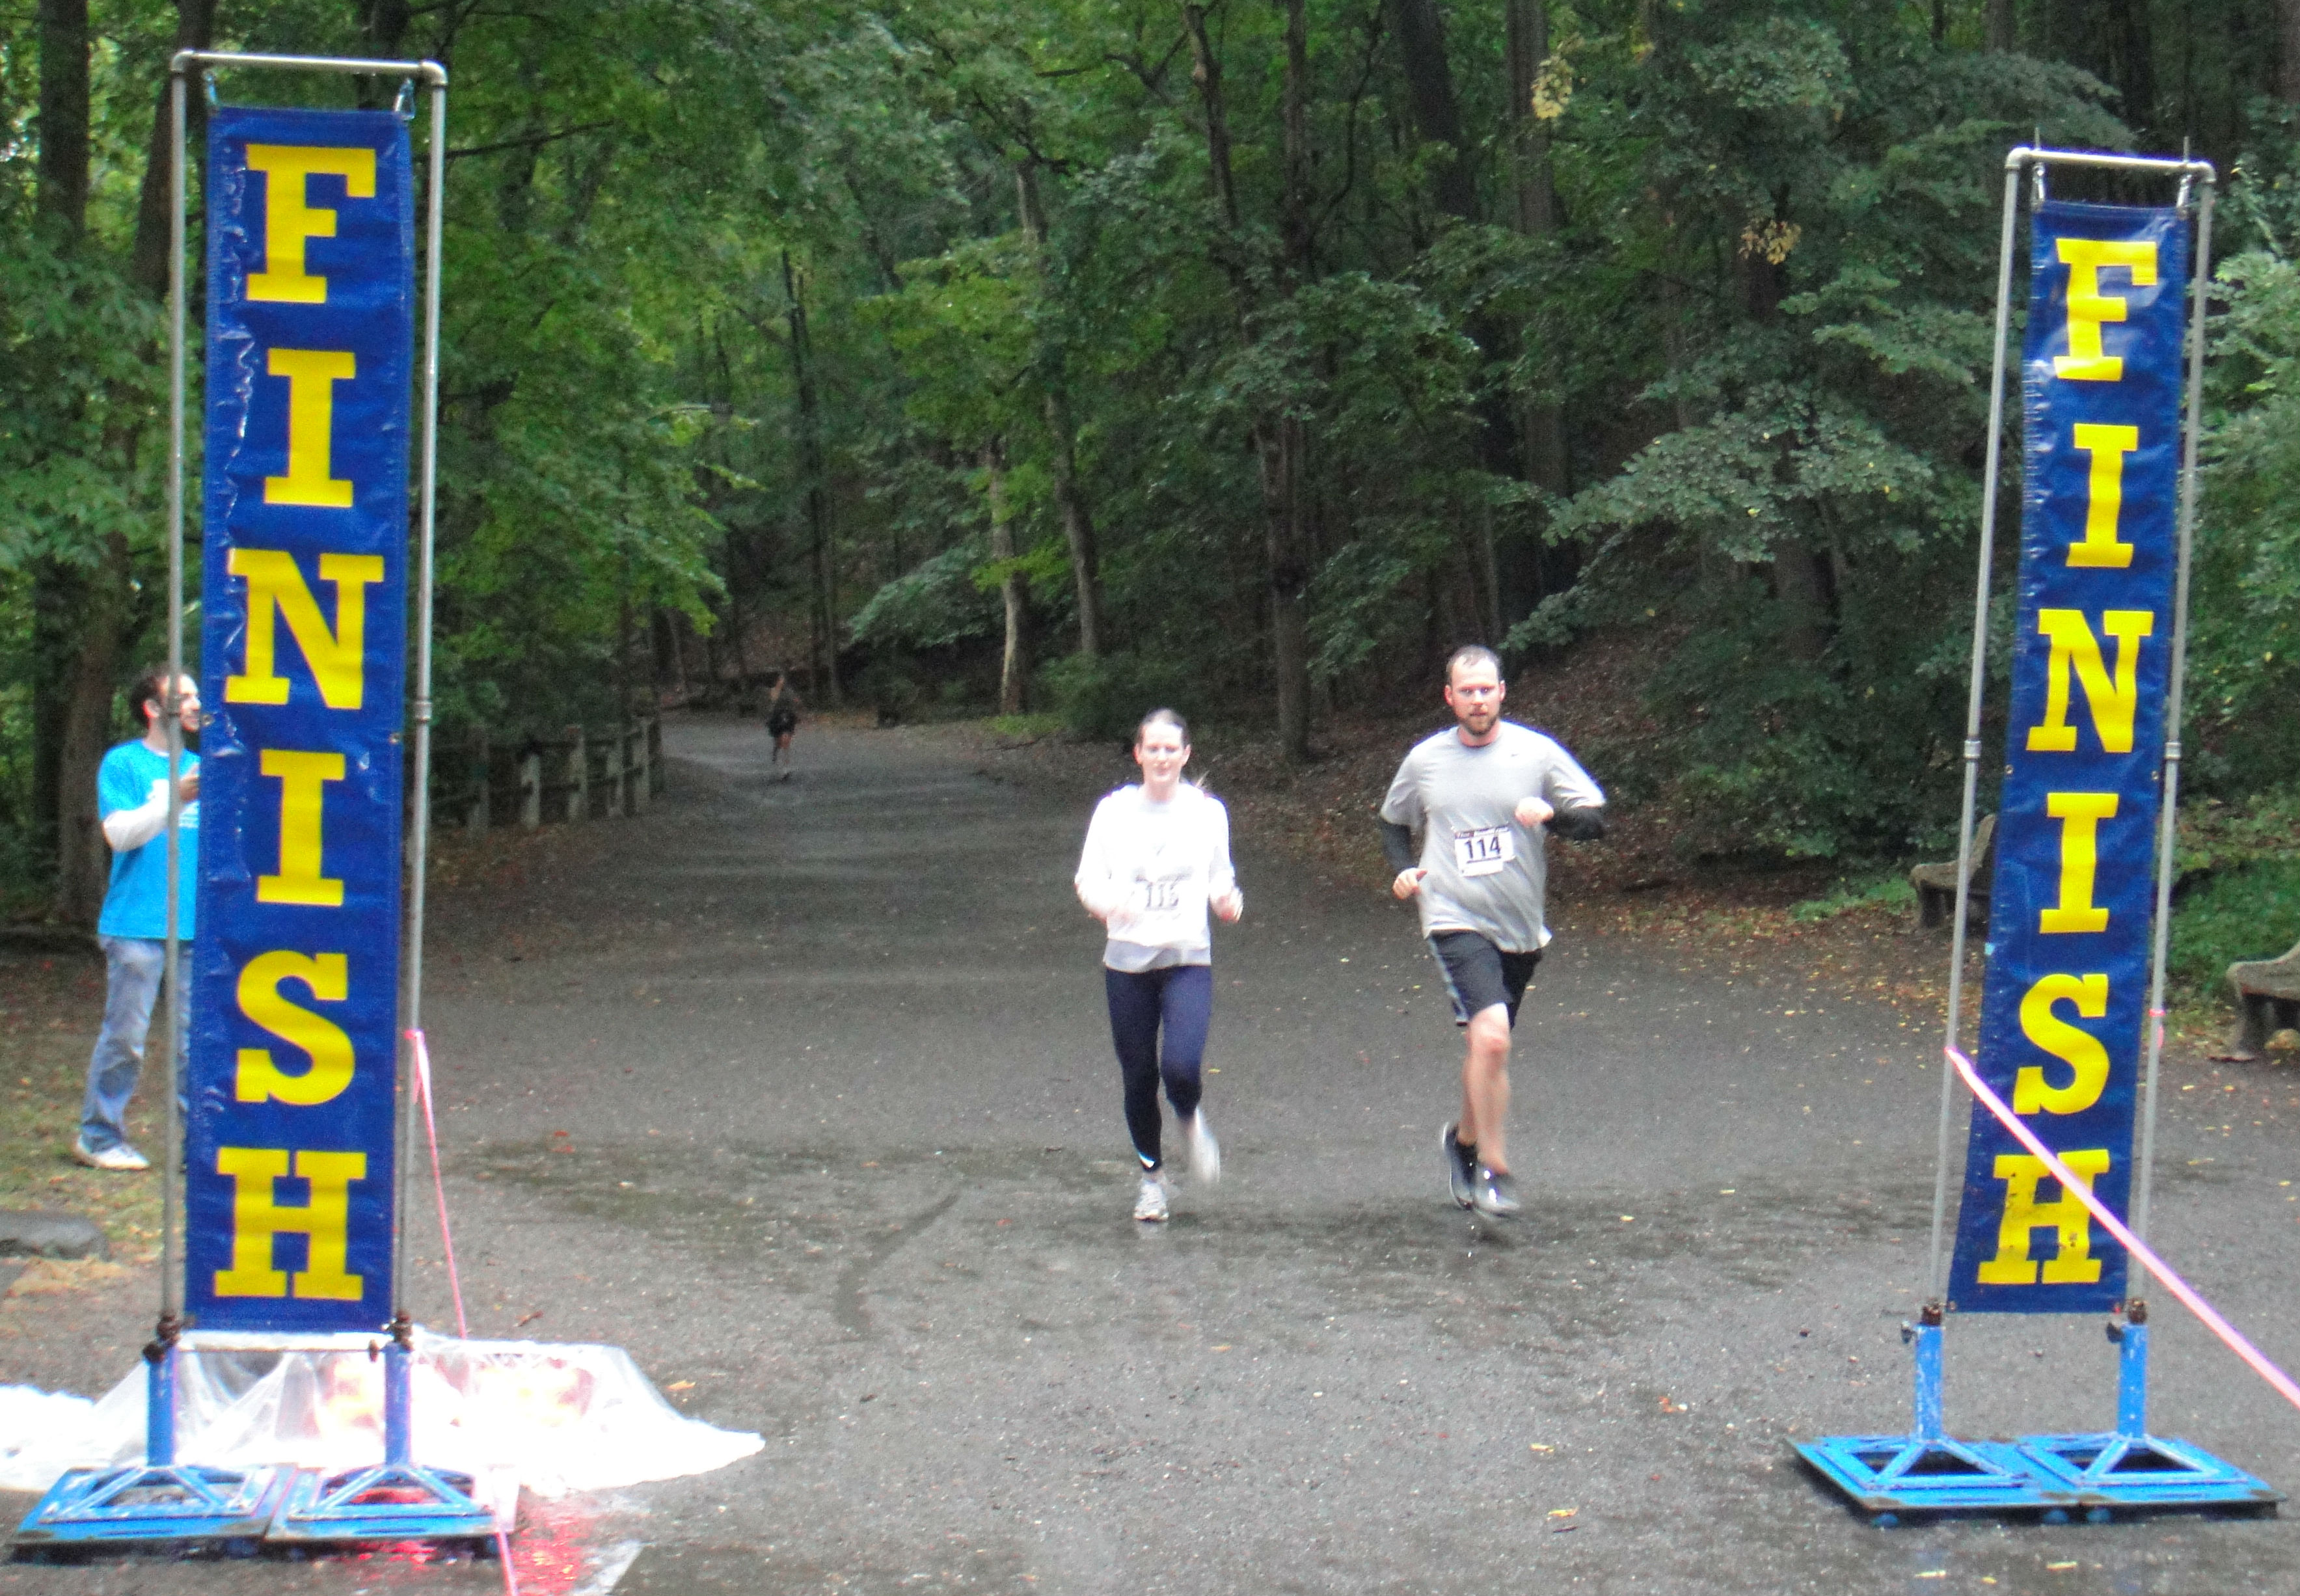 2010 Run to Rebuild participants crossed the finish line despite the rainy weather - Photo credit: Rebuilding Together Philadelphia